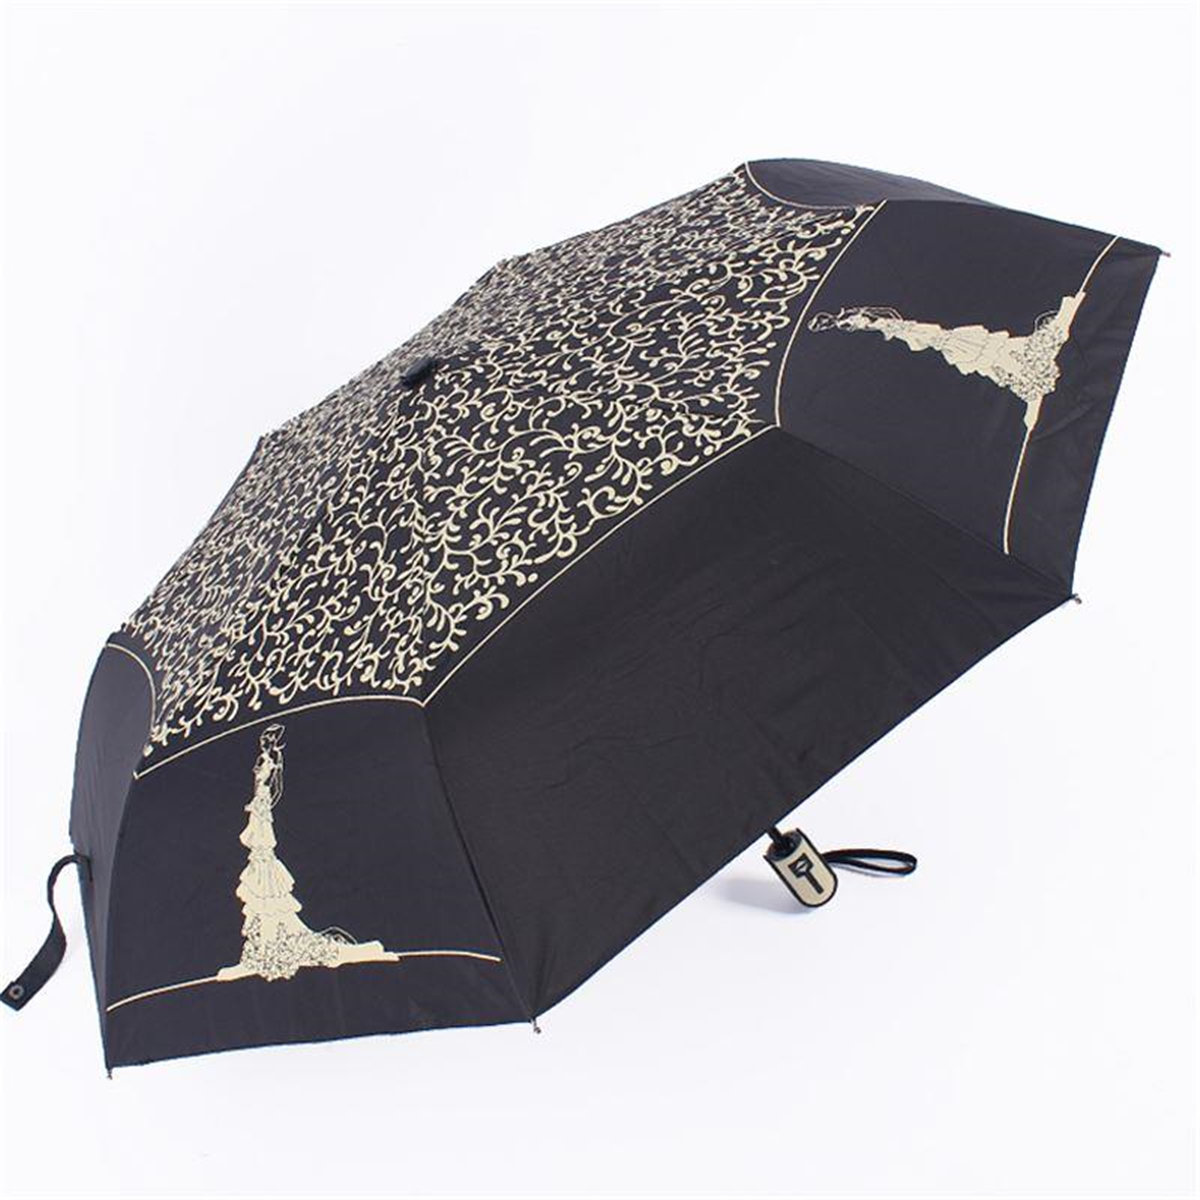 

Automatic 3 Folding Anti-UV Sun Umbrella Rain Sunscreen Umbrella Outdoor Camping Hiking Traveling Woman Umbrellas-Black